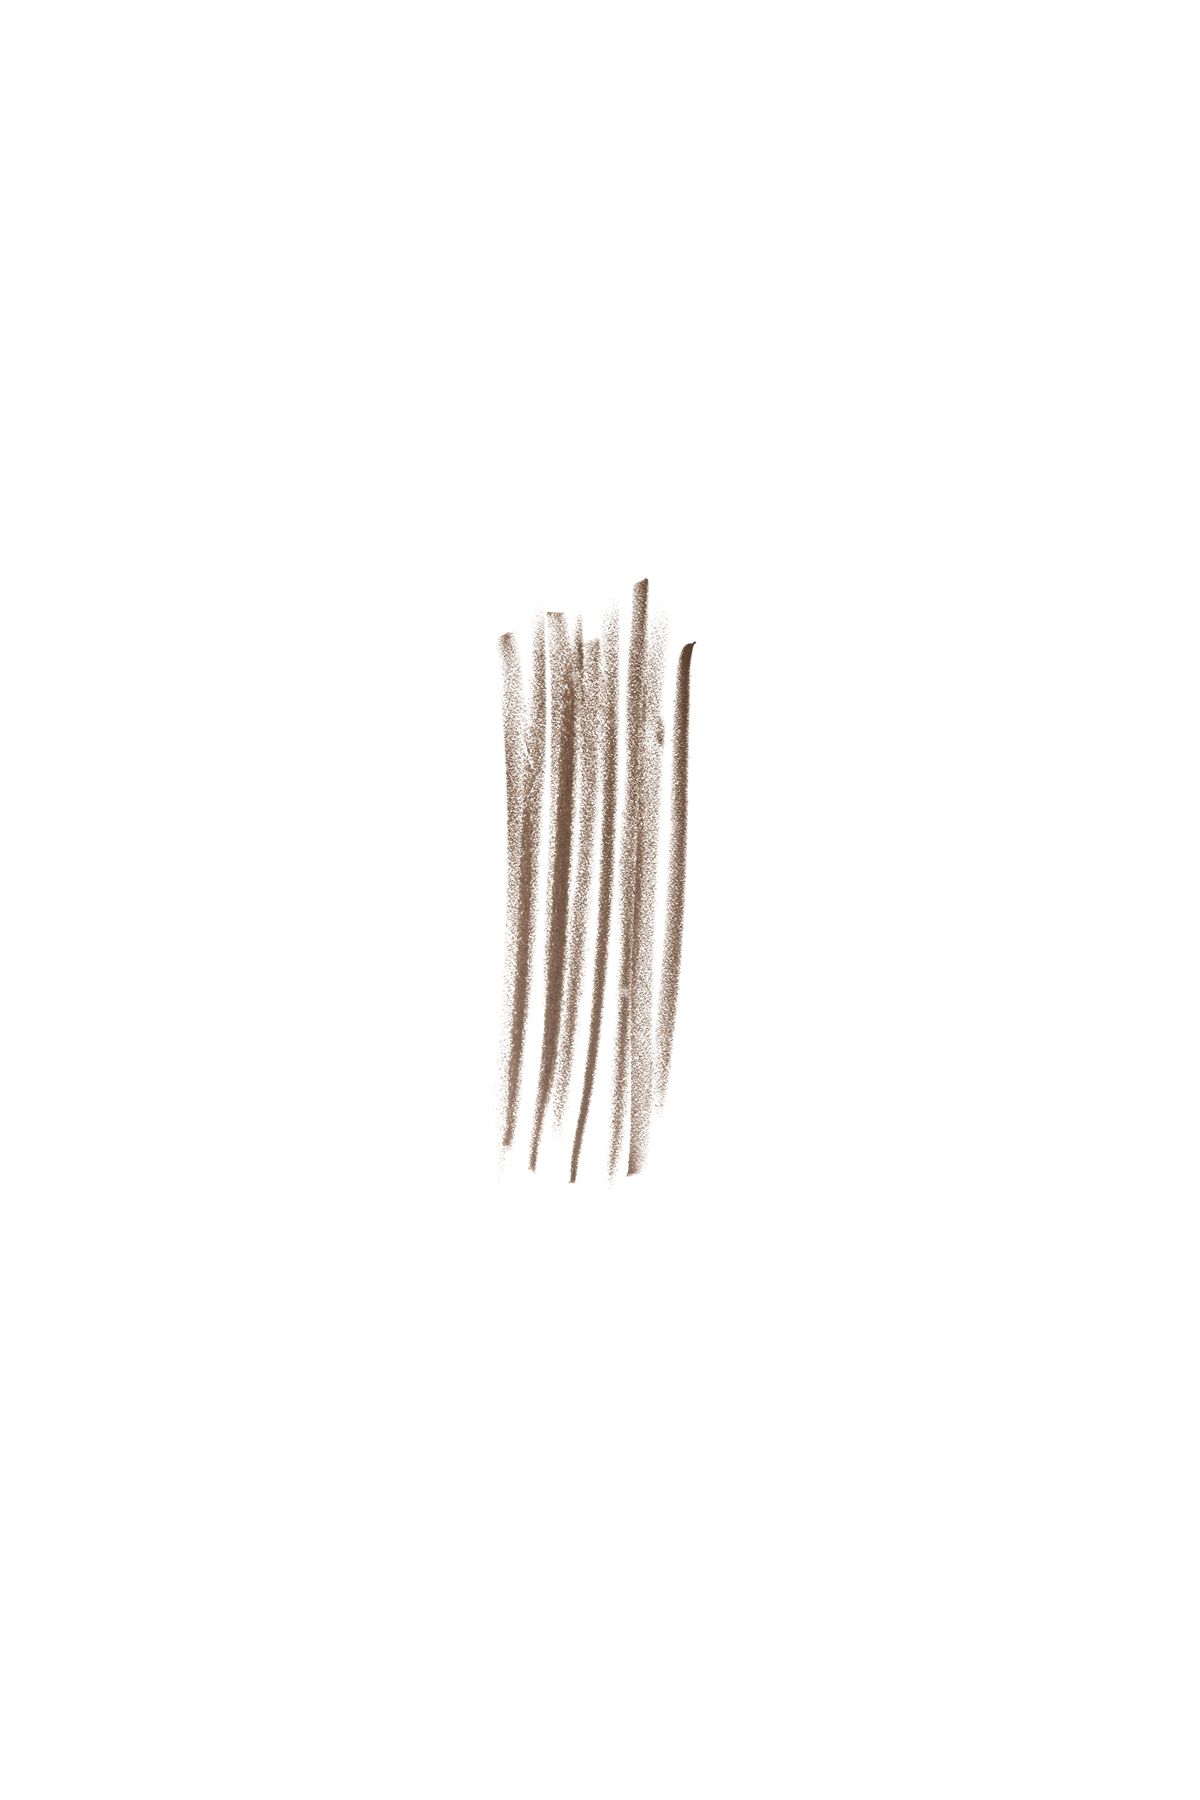 Bobbi Brown مداد ابرو ماندگار ریفیل کاسه مداد قهوه ای شیرین 7161703111135